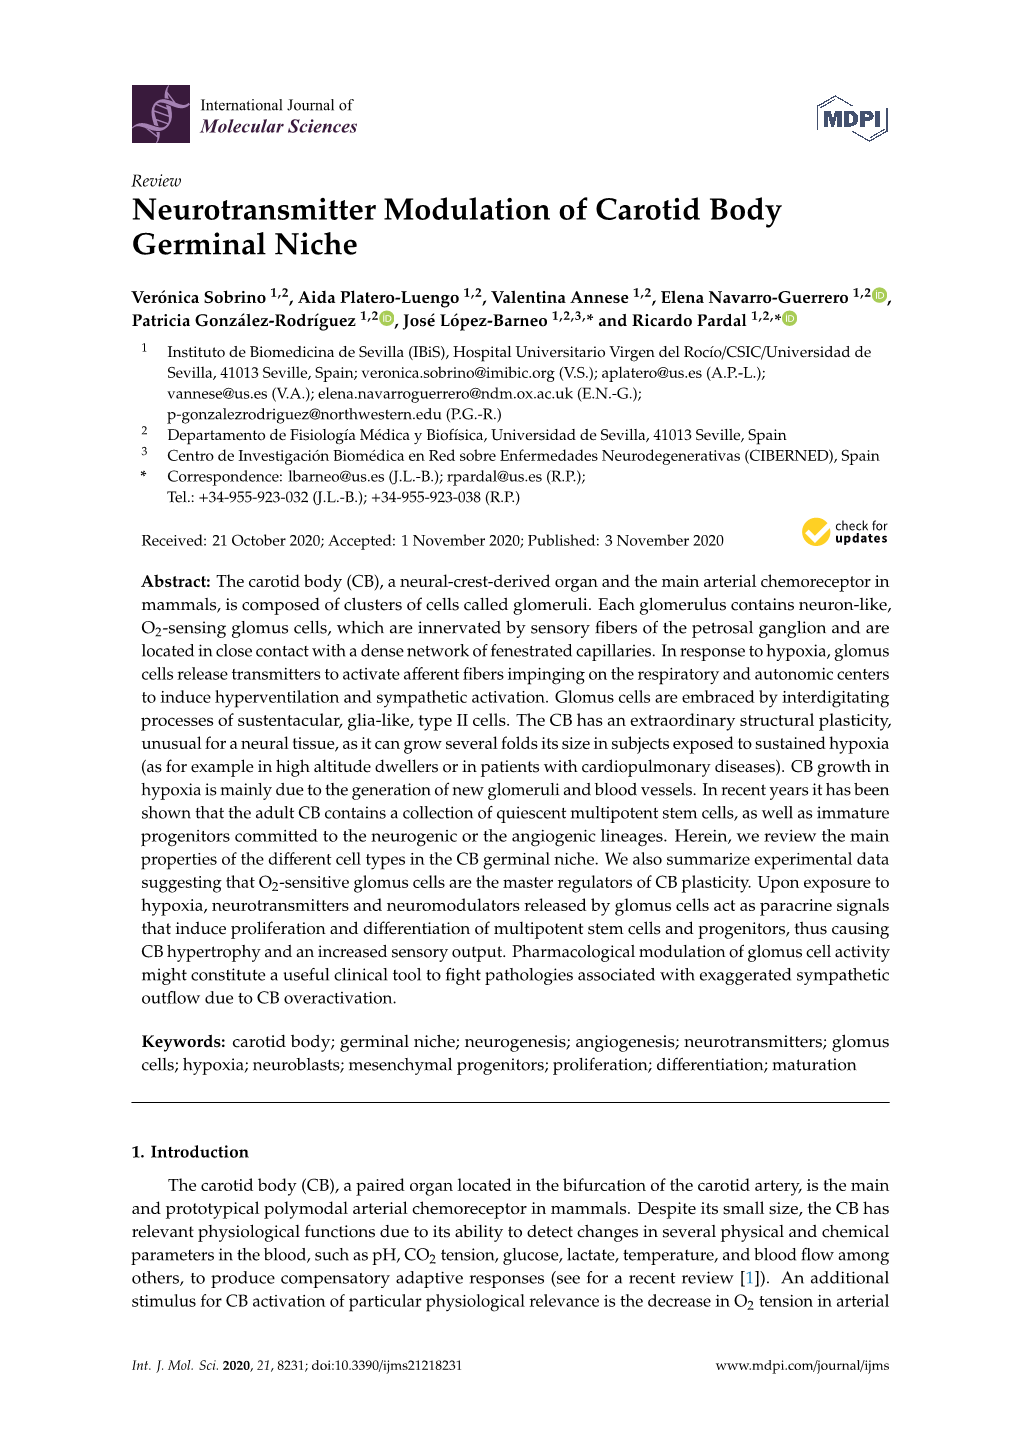 Neurotransmitter Modulation of Carotid Body Germinal Niche